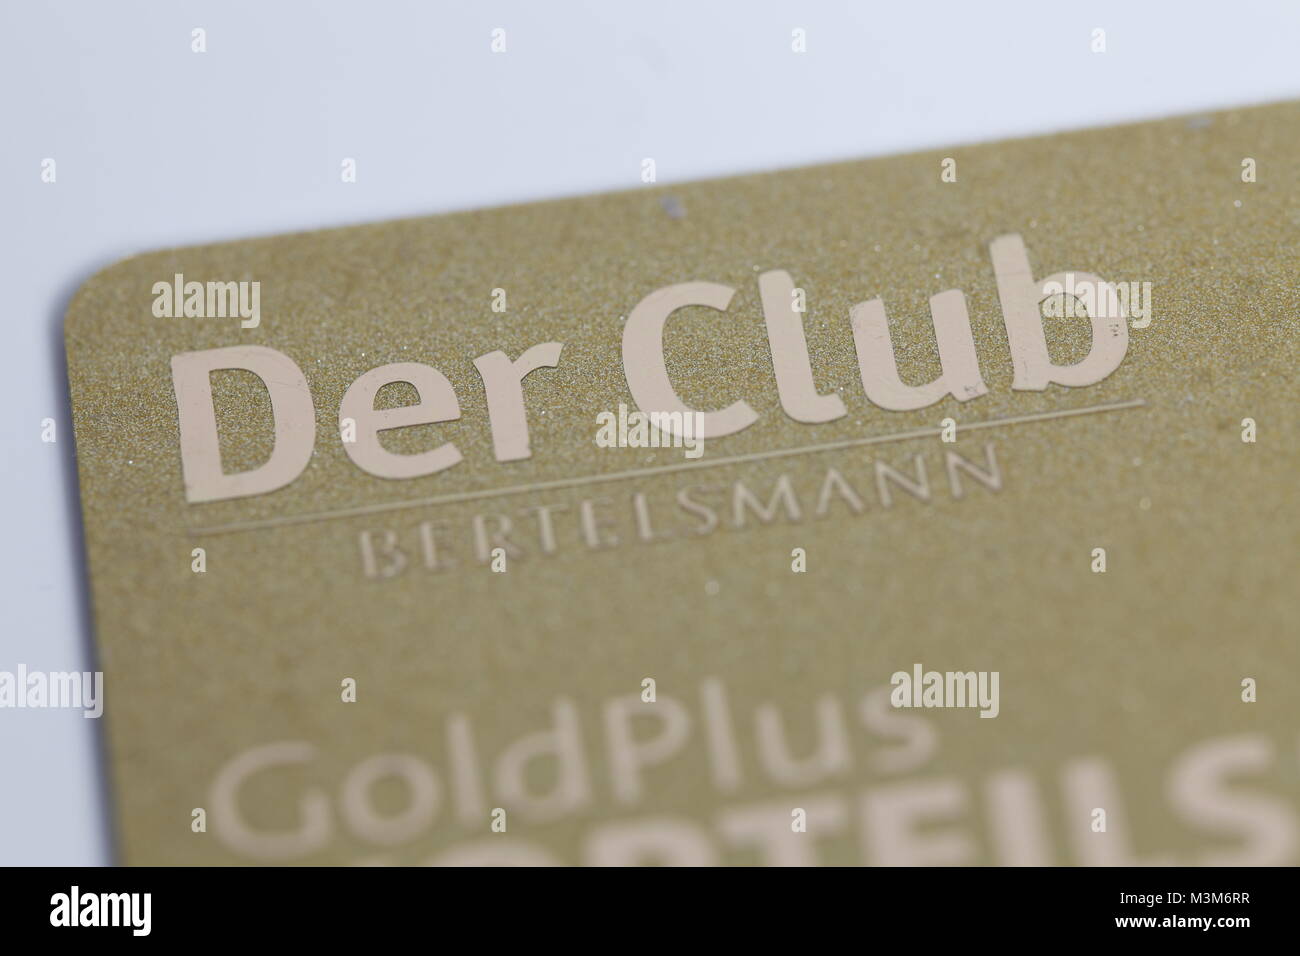 Bertelsmann Clubkarte Stock Photo